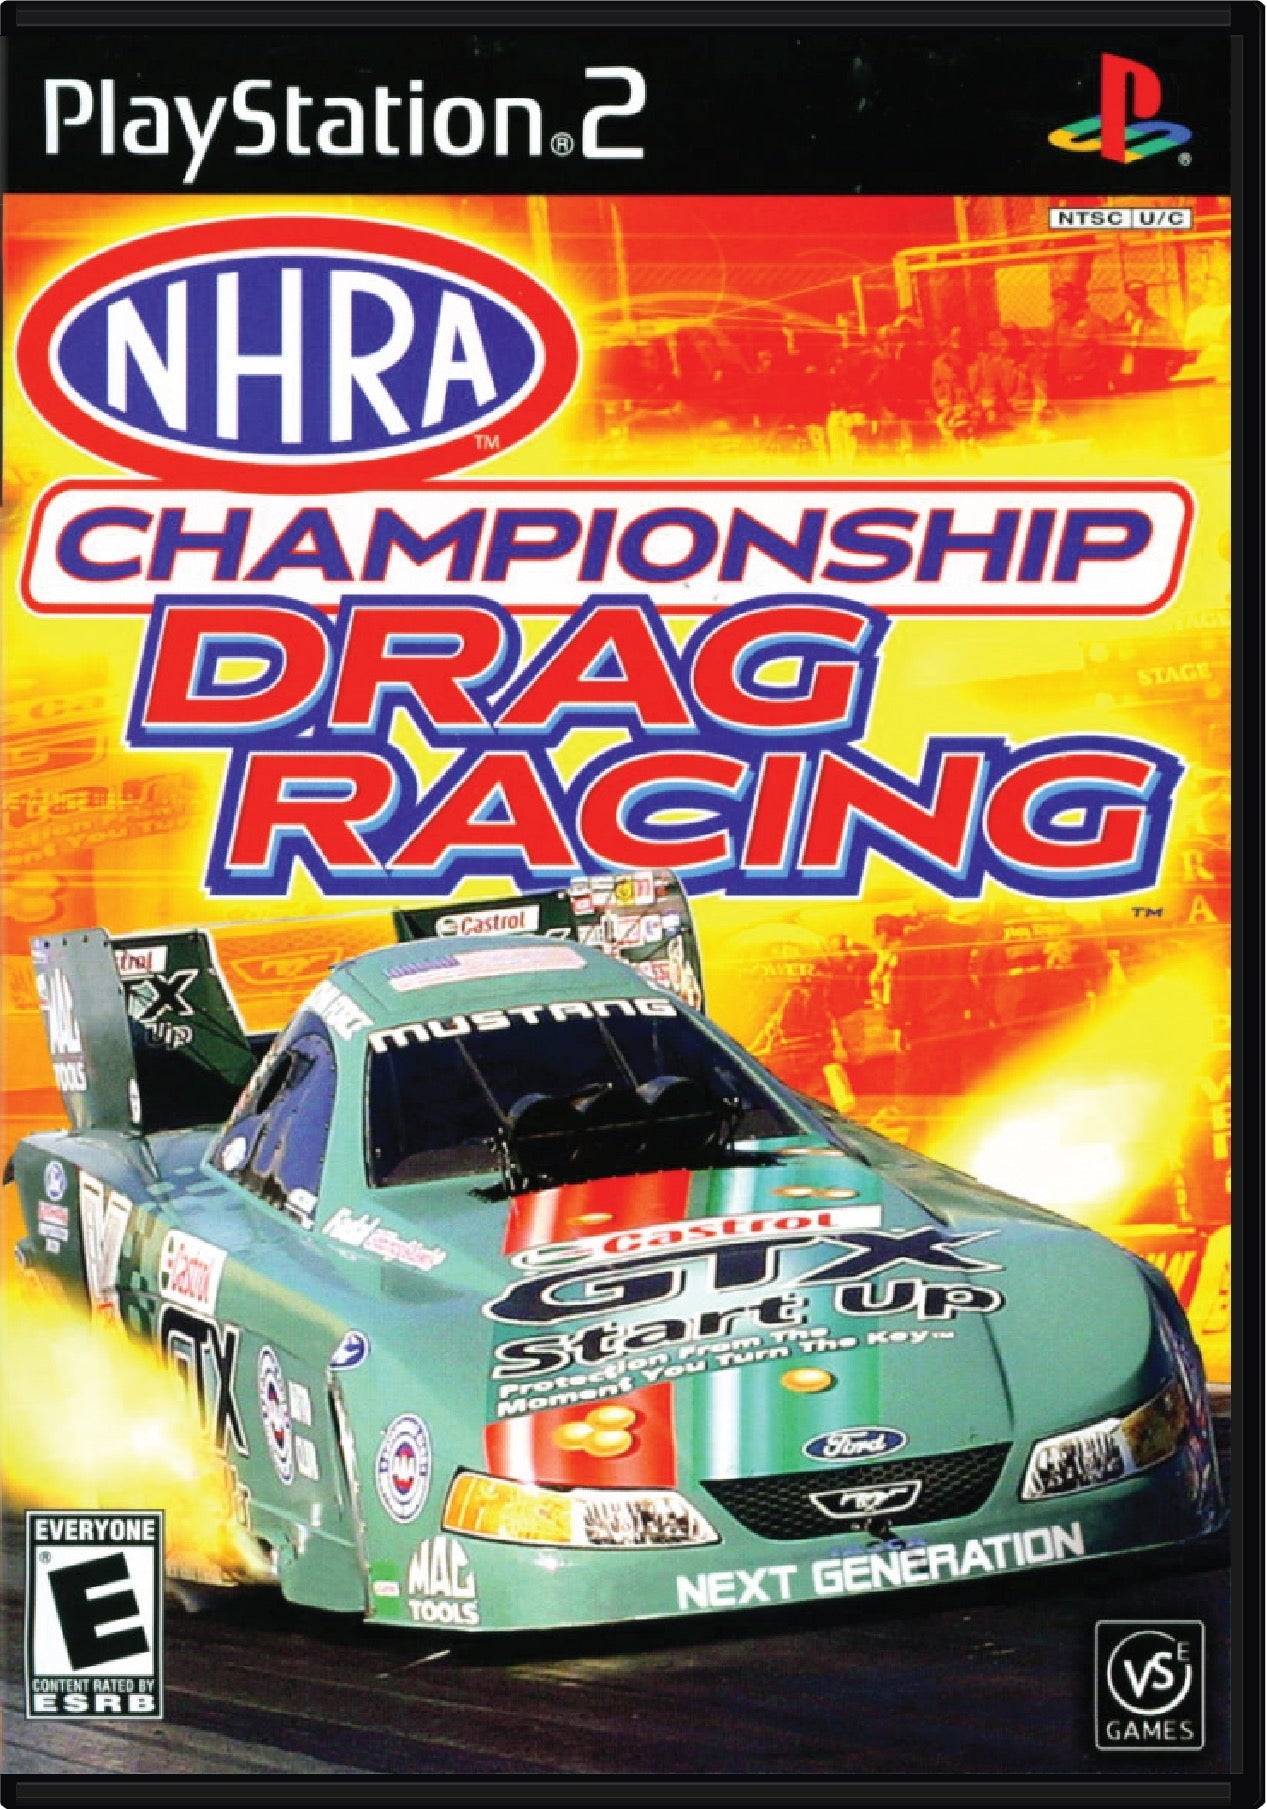 NHRA Championship Drag Racing Cover Art and Product Photo